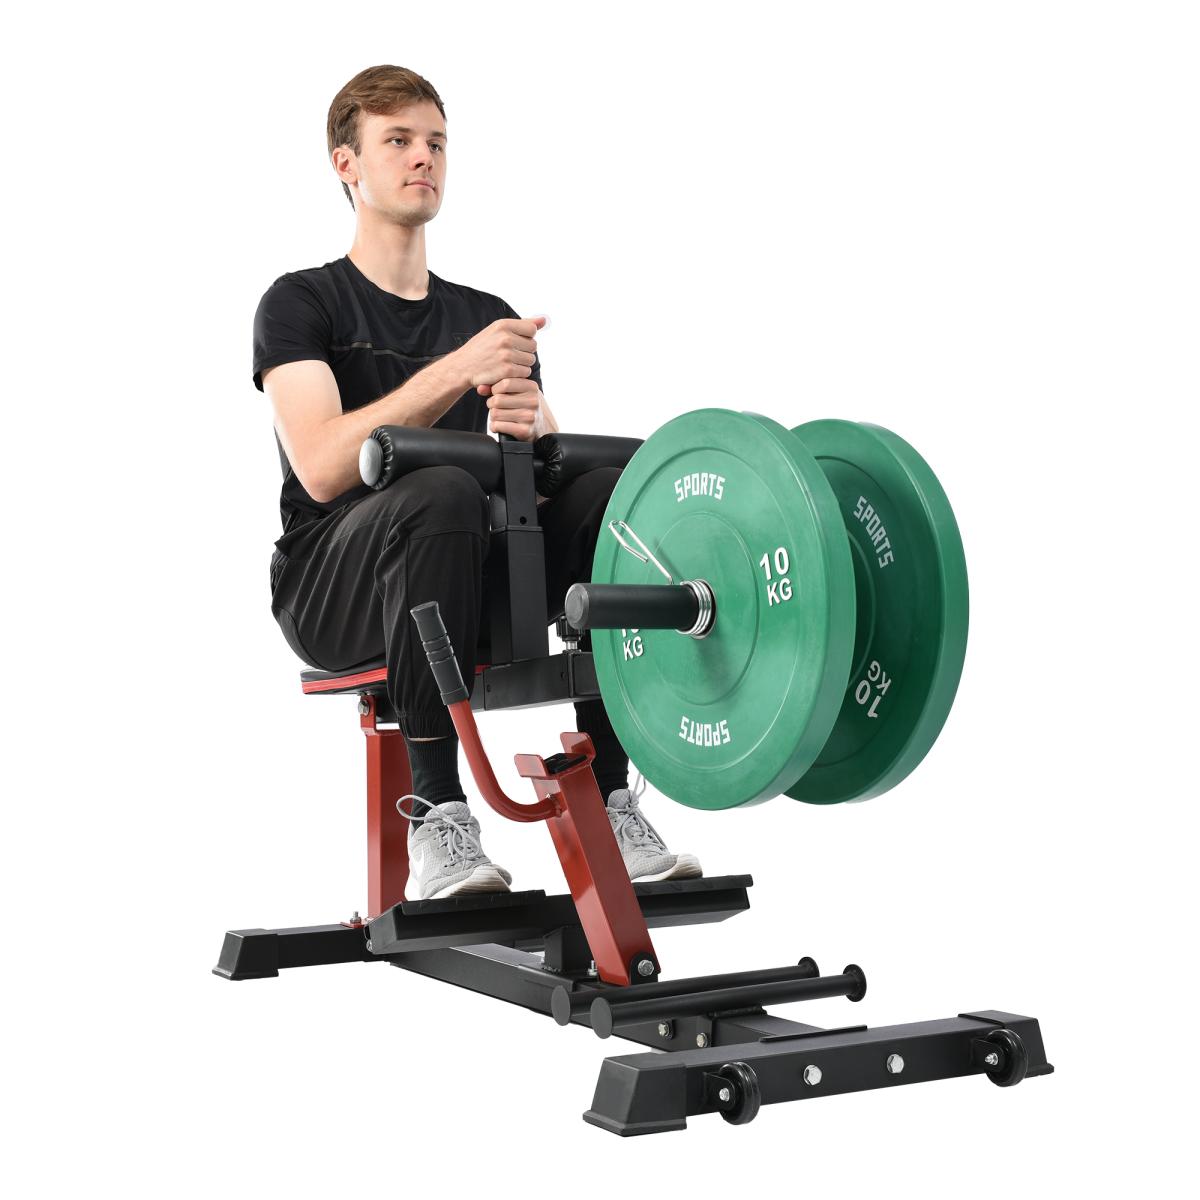 Adjustable Seated Calf Raise Machine,Calf Raise Machine with Band Pegs,Leg Trainer Home Gym